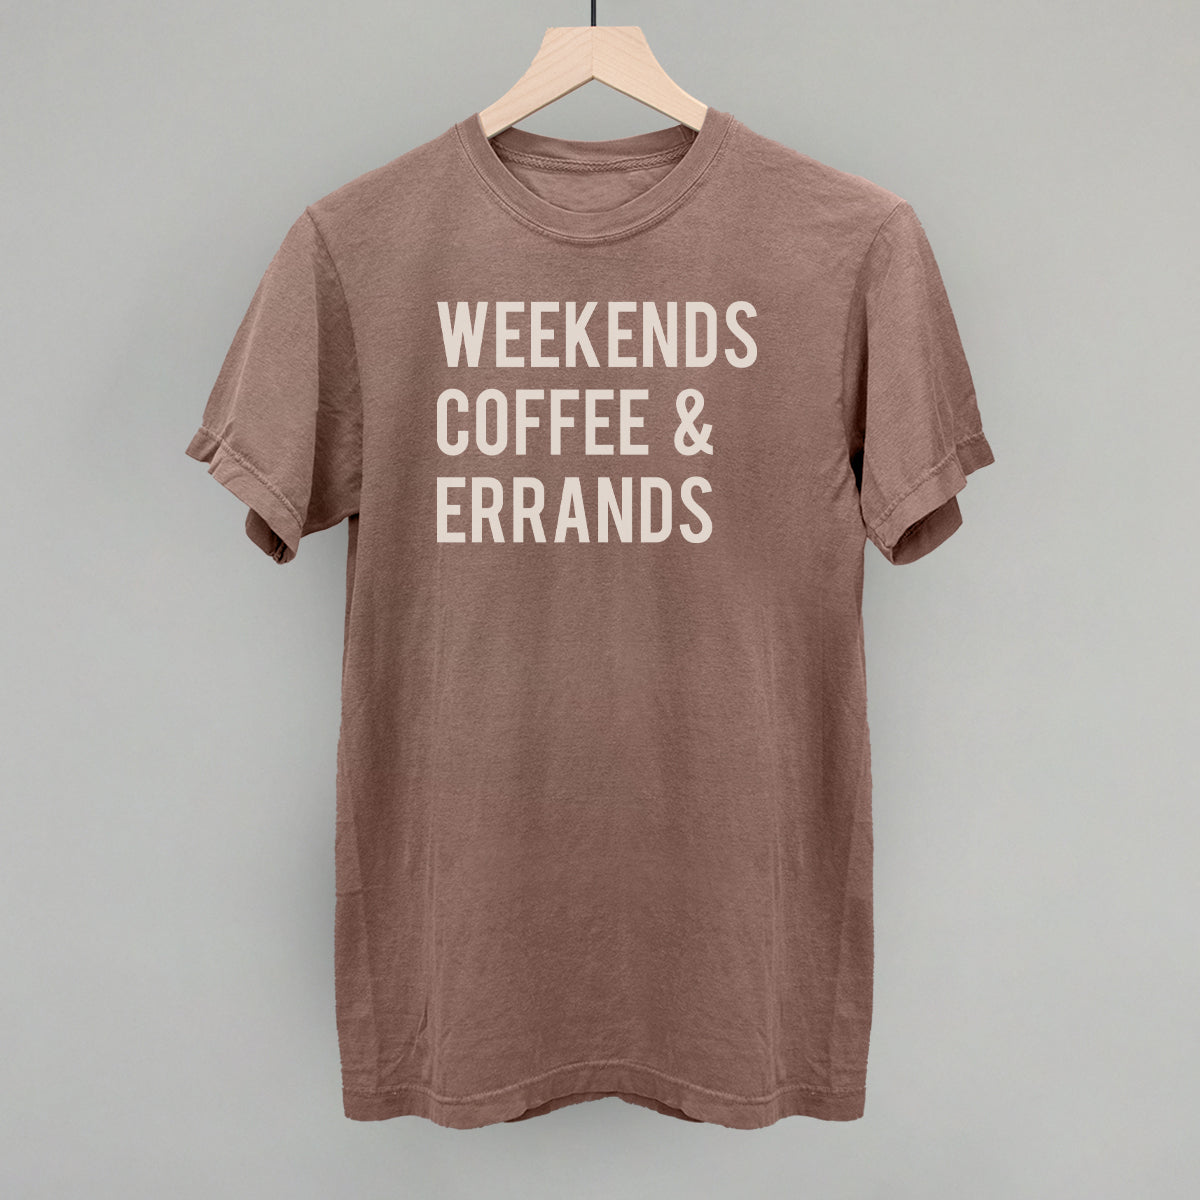 Weekends Coffee & Errands